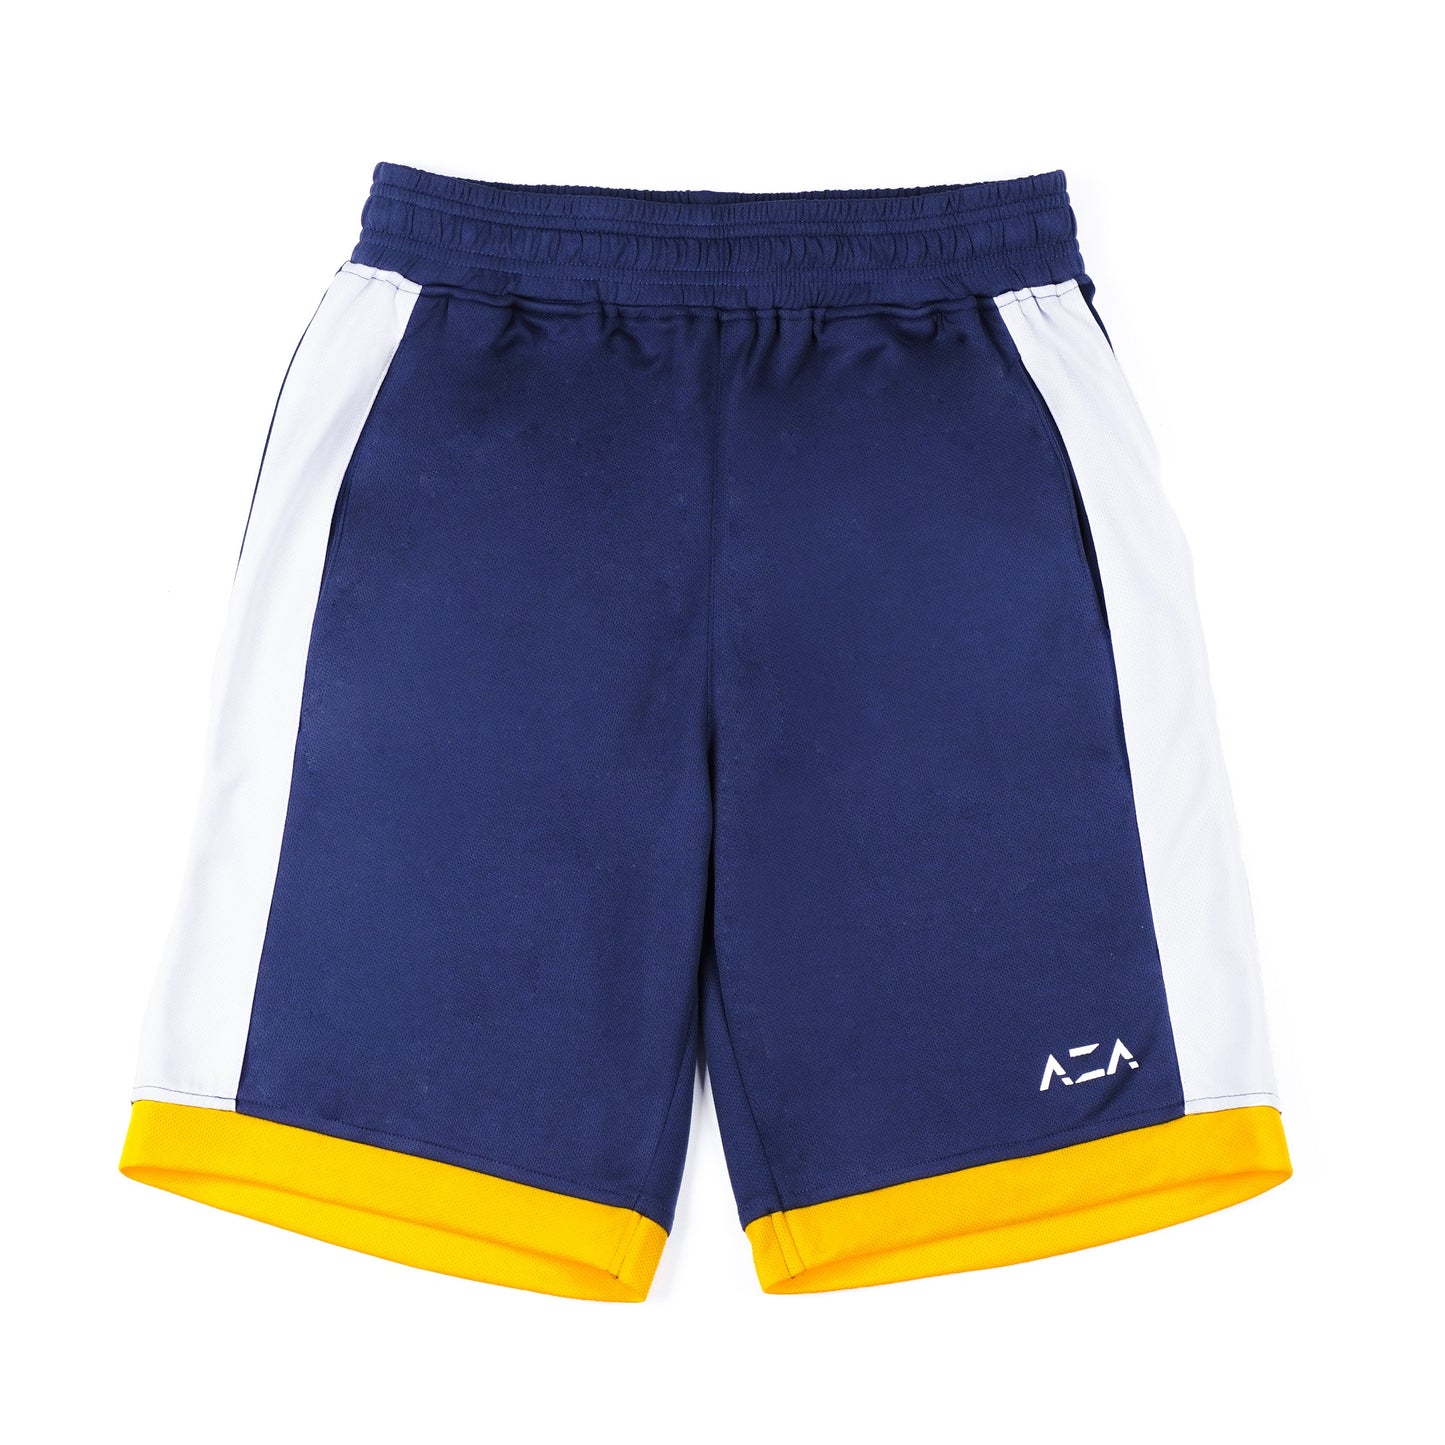 AZA Short Pants Basketball Elite Series - Navy